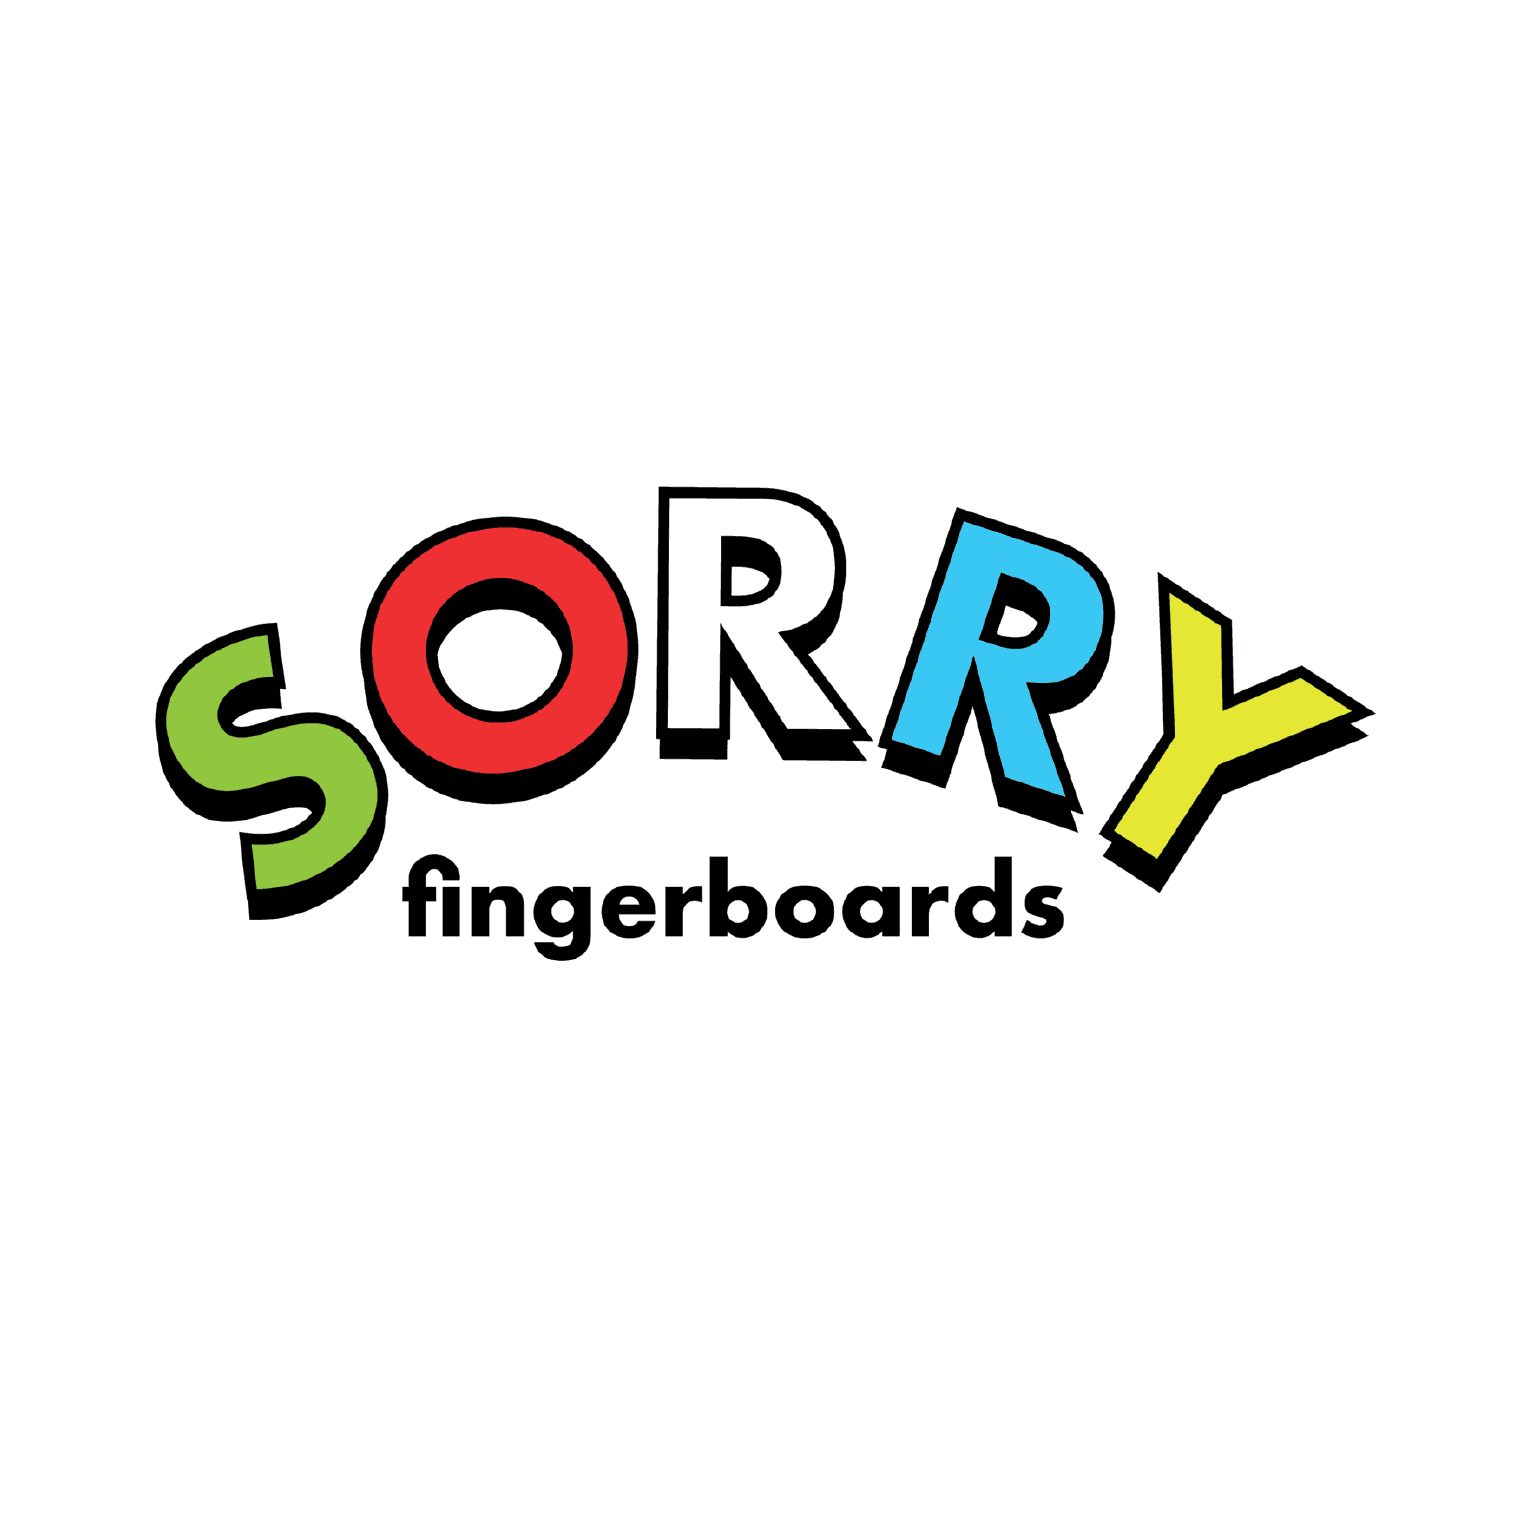 Sorry Fingerboards